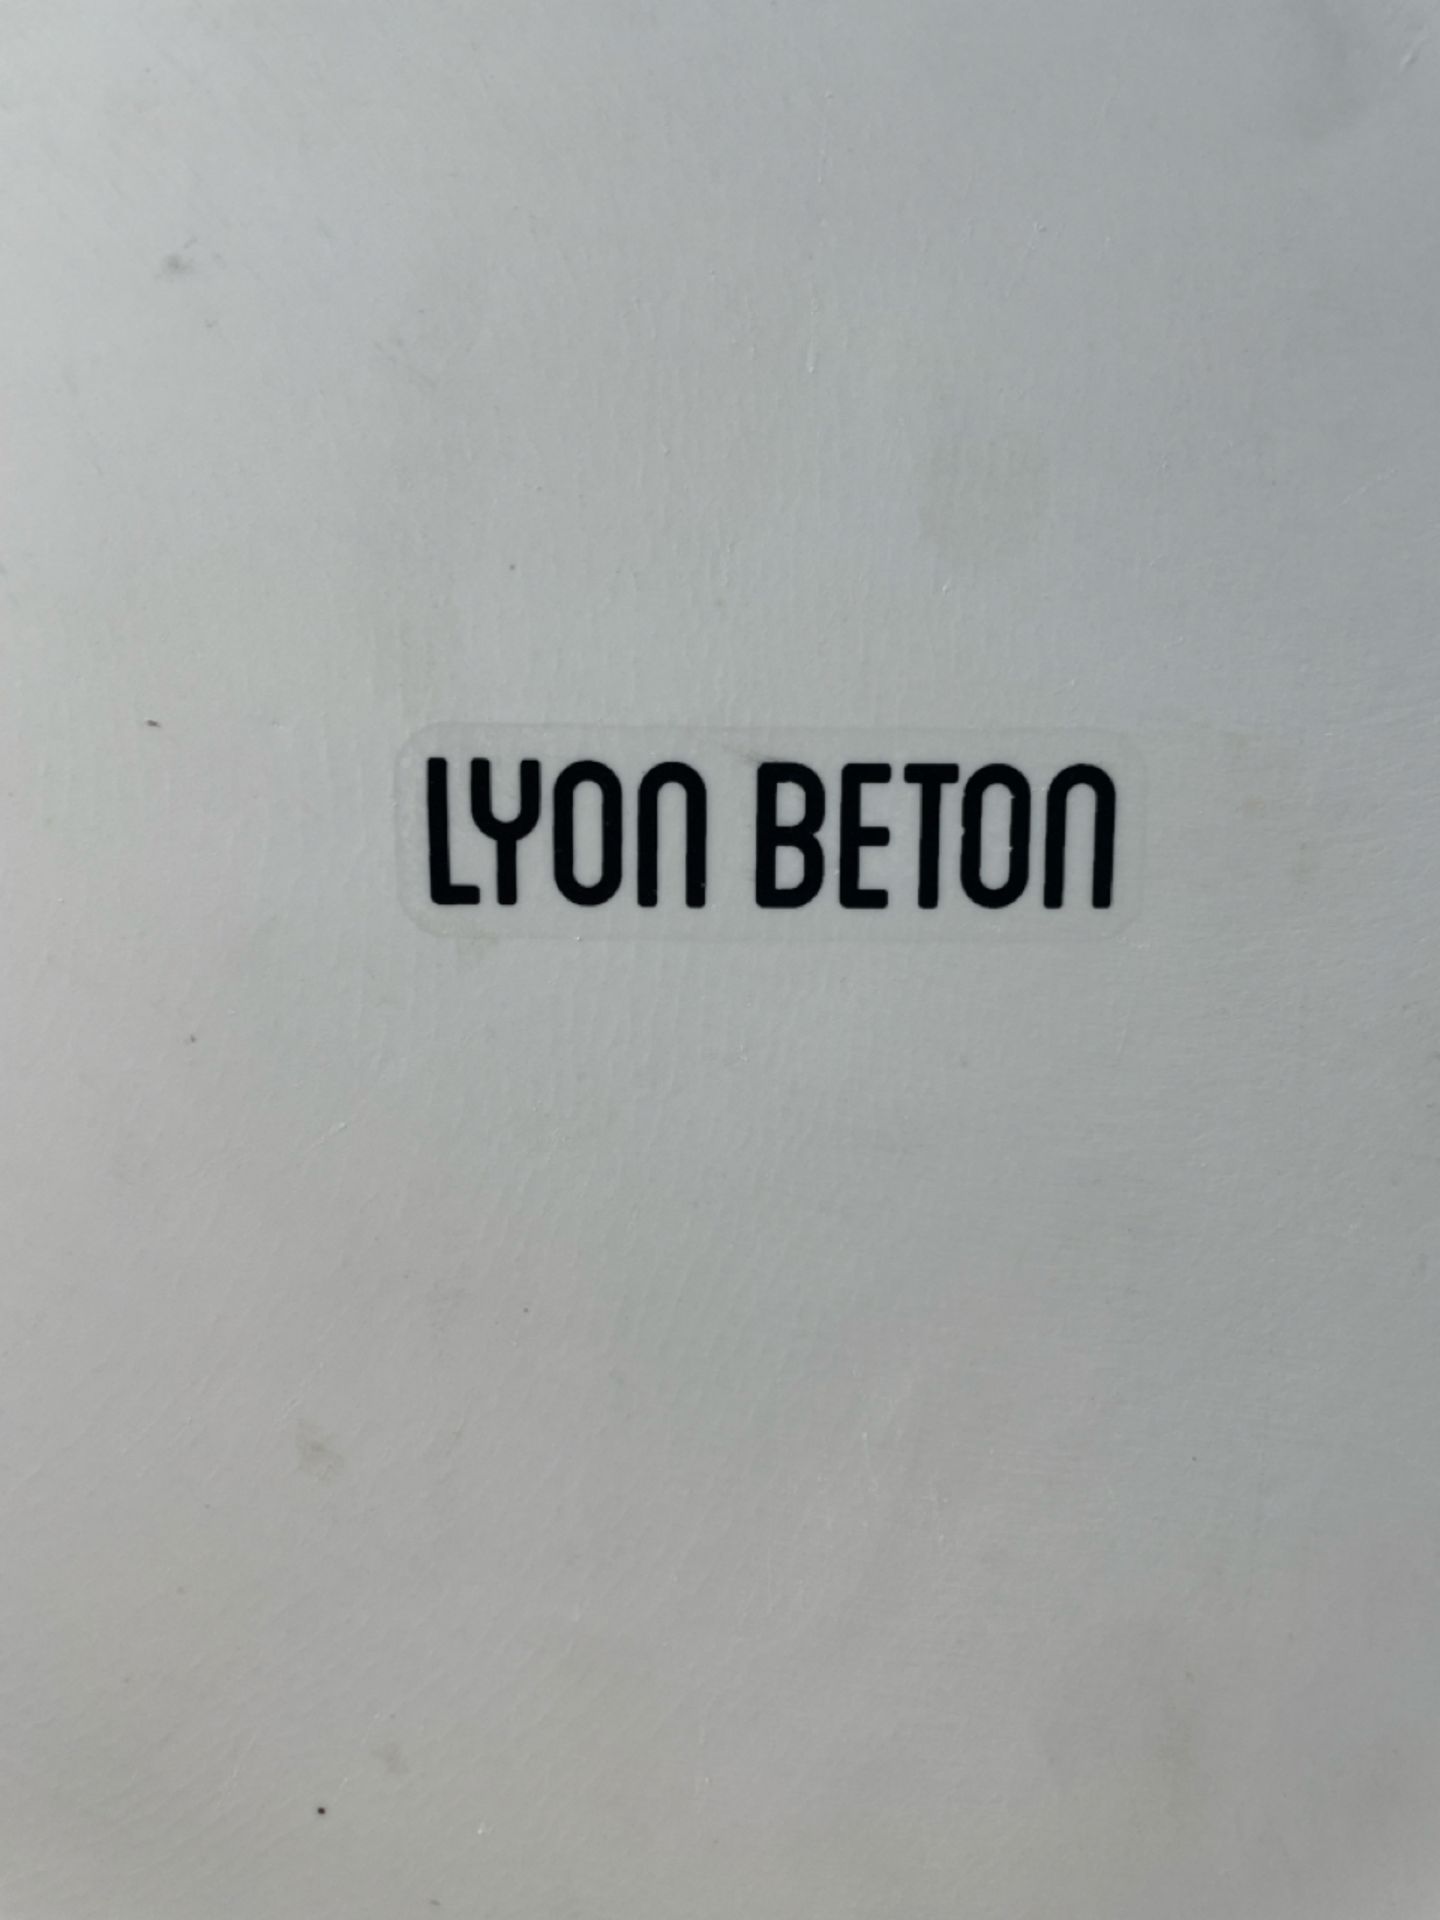 Lyon Beton Poceline Plate - Image 2 of 3